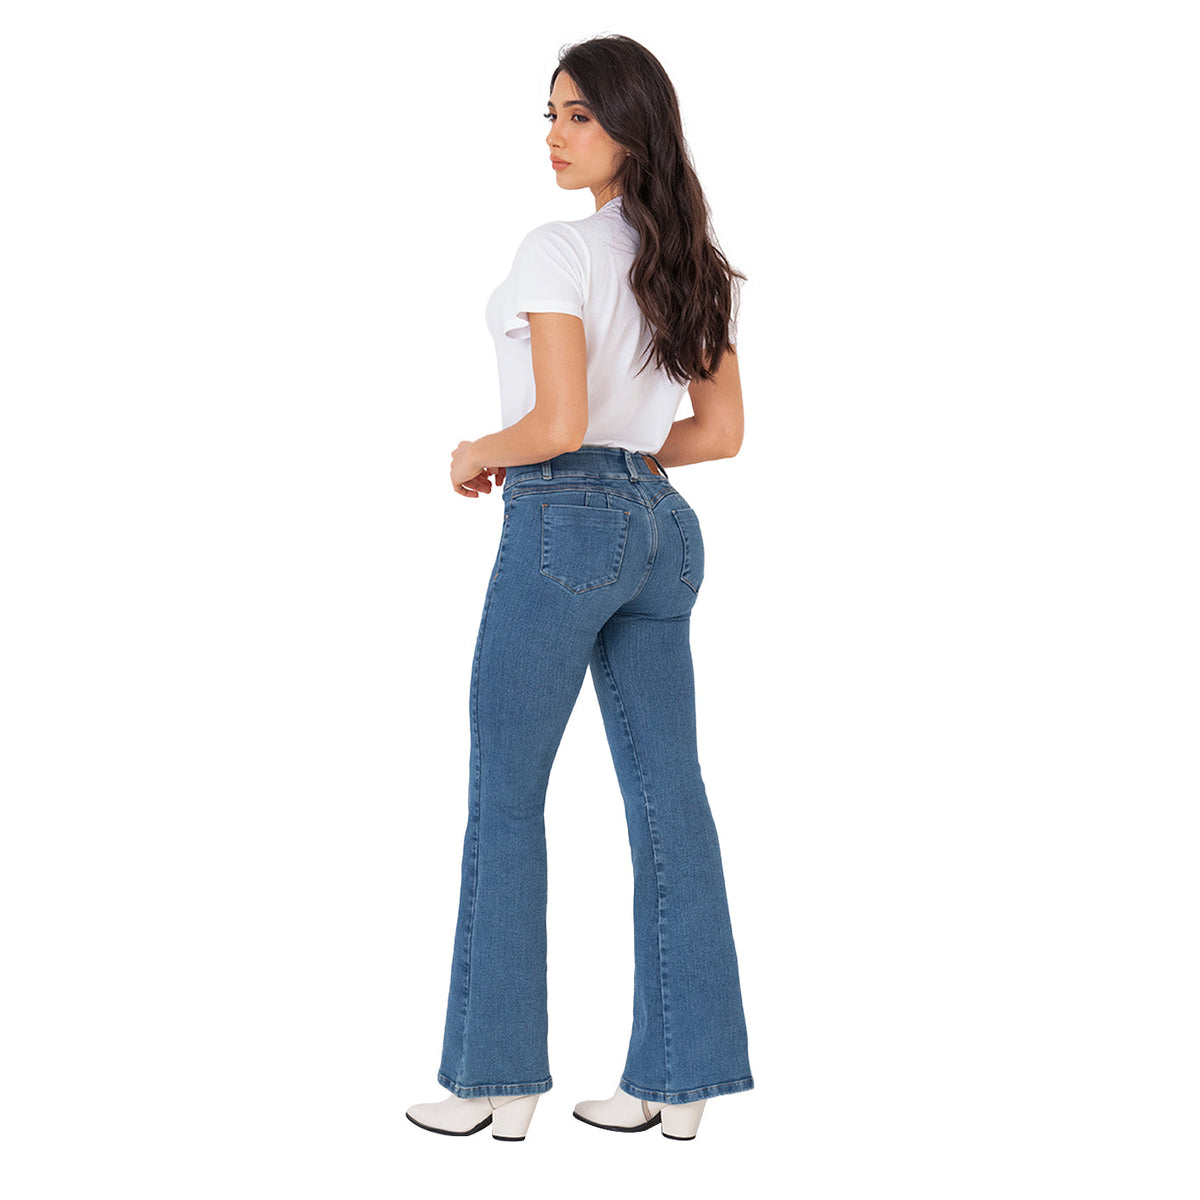 DIAMANTE - LOWLA 212357 - Bum Lift Flare Colombian Jeans